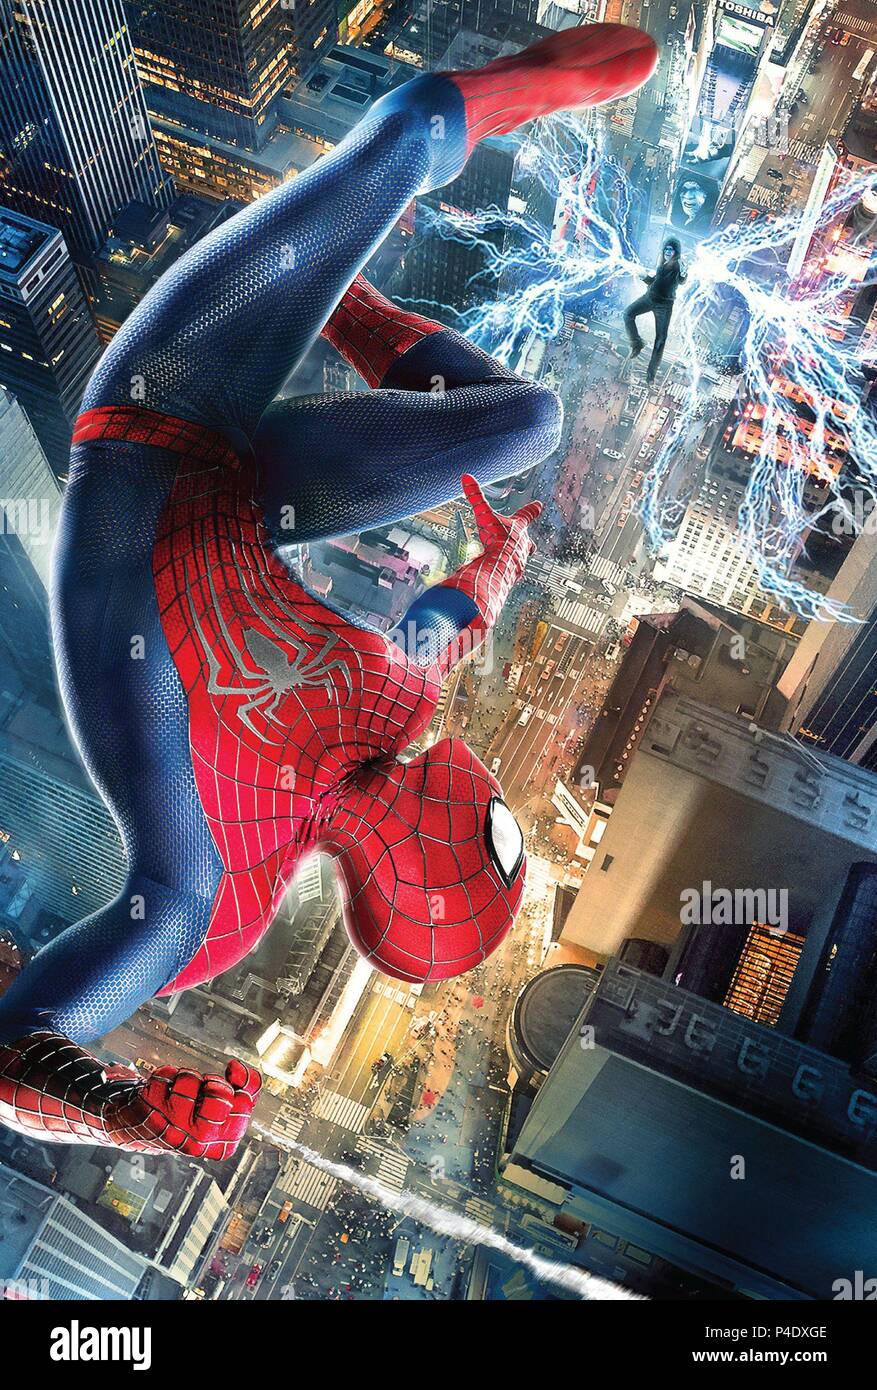 Original Film Titel: THE AMAZING SPIDER-MAN 2. Englischer Titel: The Amazing Spider-MAN 2. Regisseur: Marc Webb. Jahr: 2014. Credit: MARVEL ENTERPRISES/Album Stockfoto